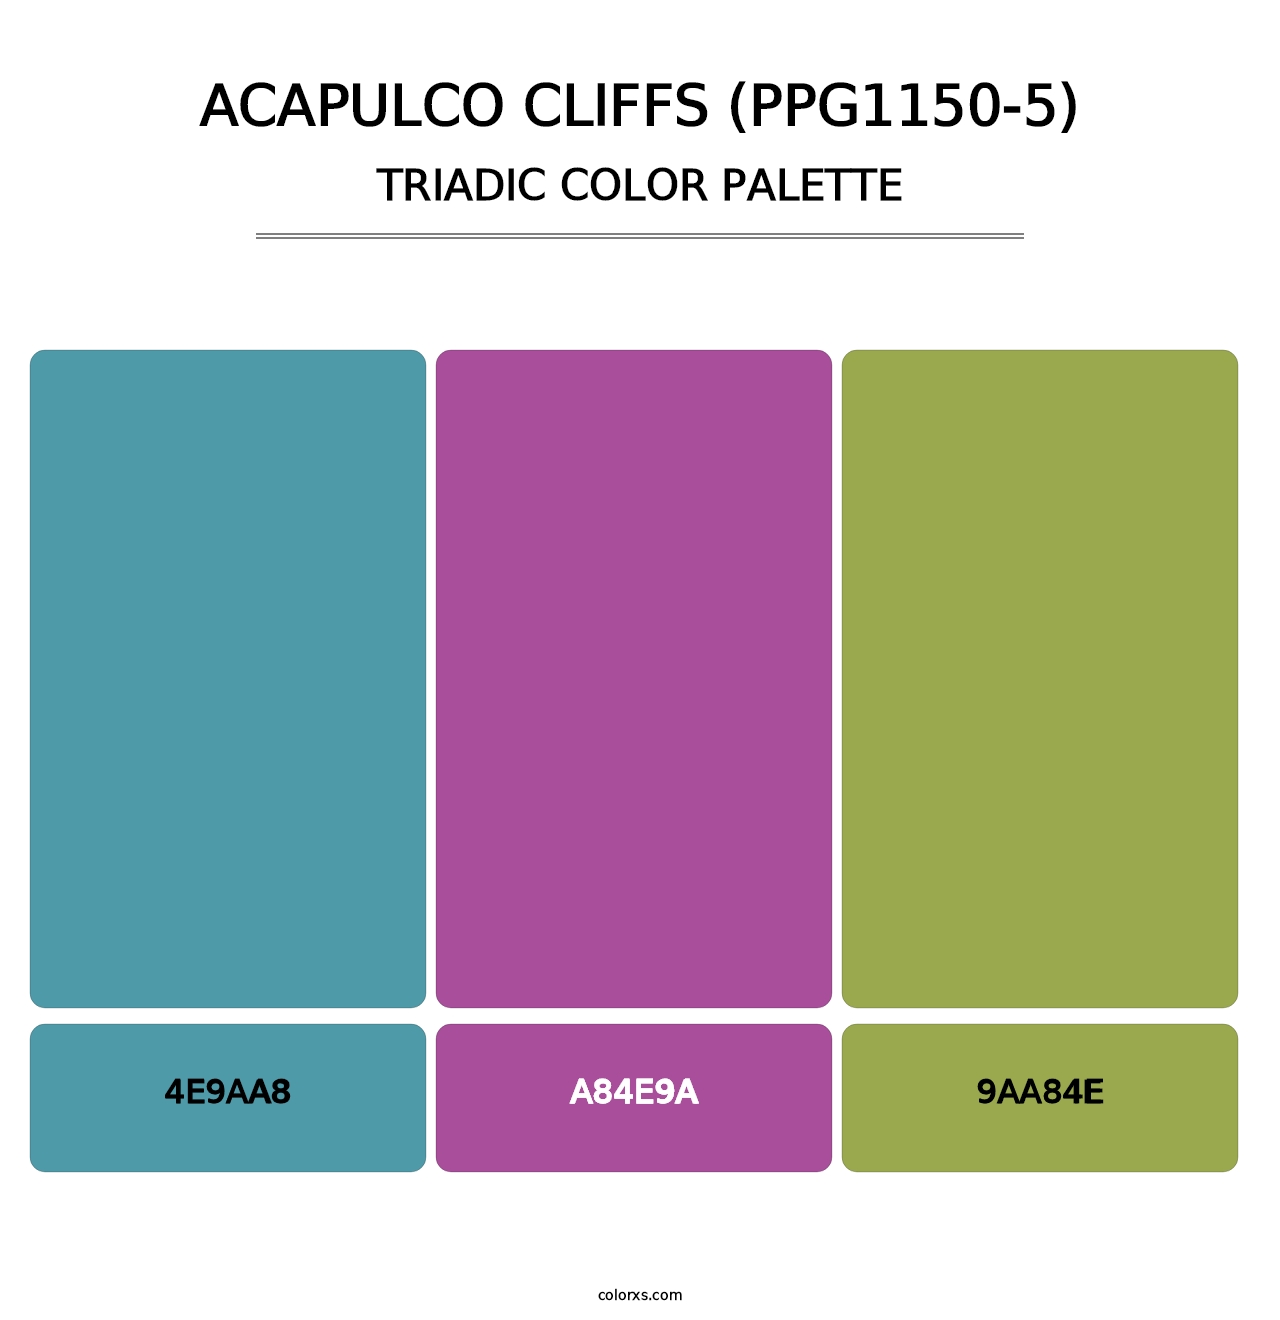 Acapulco Cliffs (PPG1150-5) - Triadic Color Palette